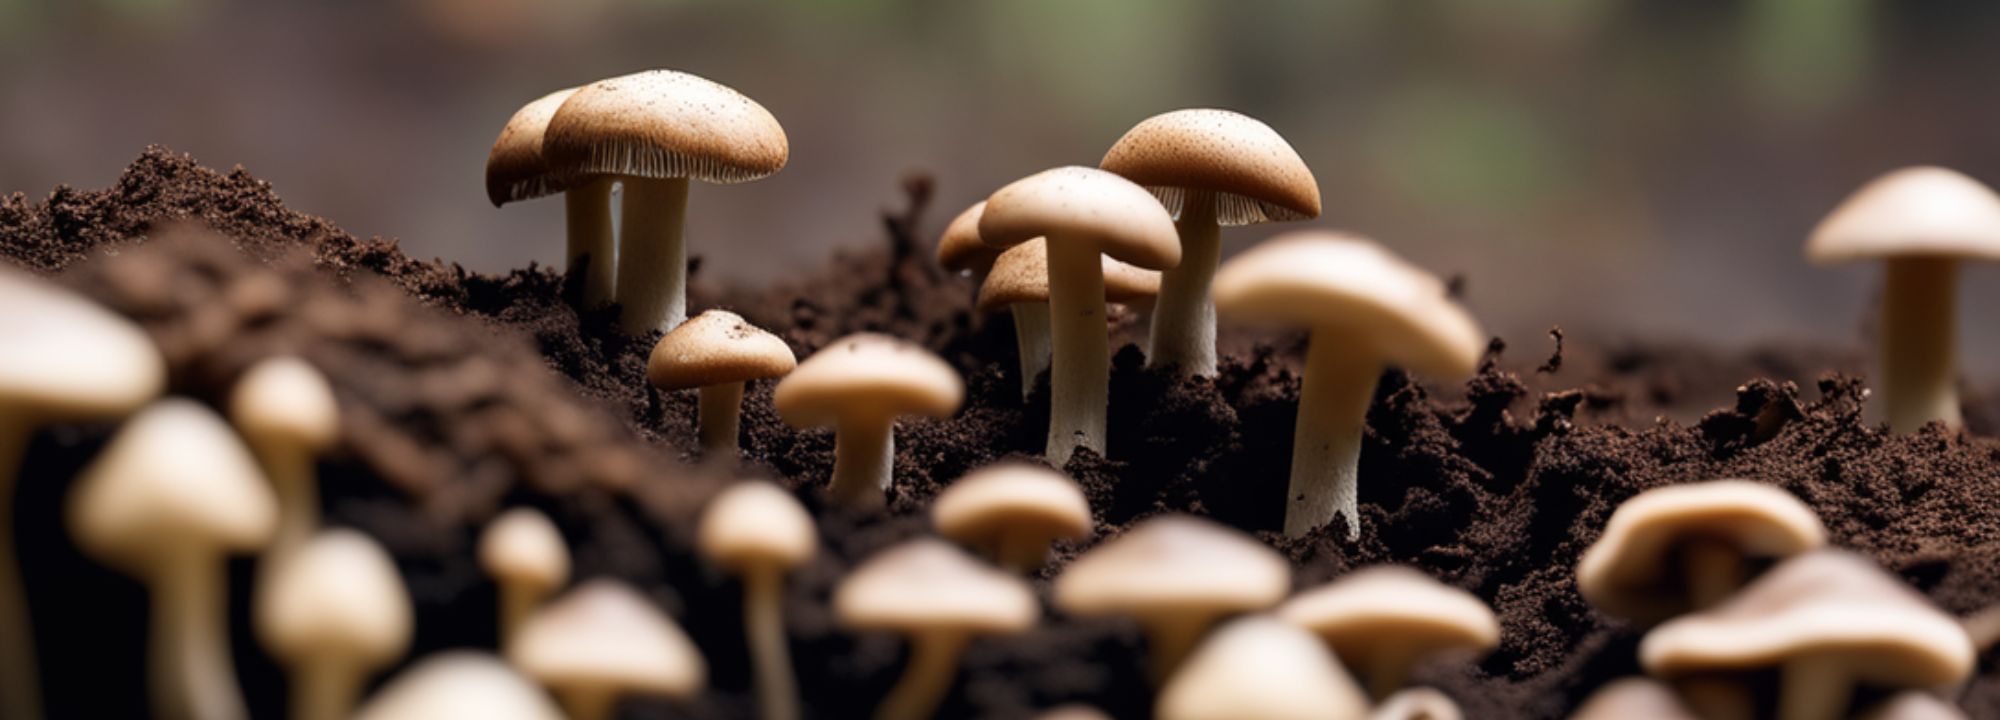 growing mushrooms in coffee grounds